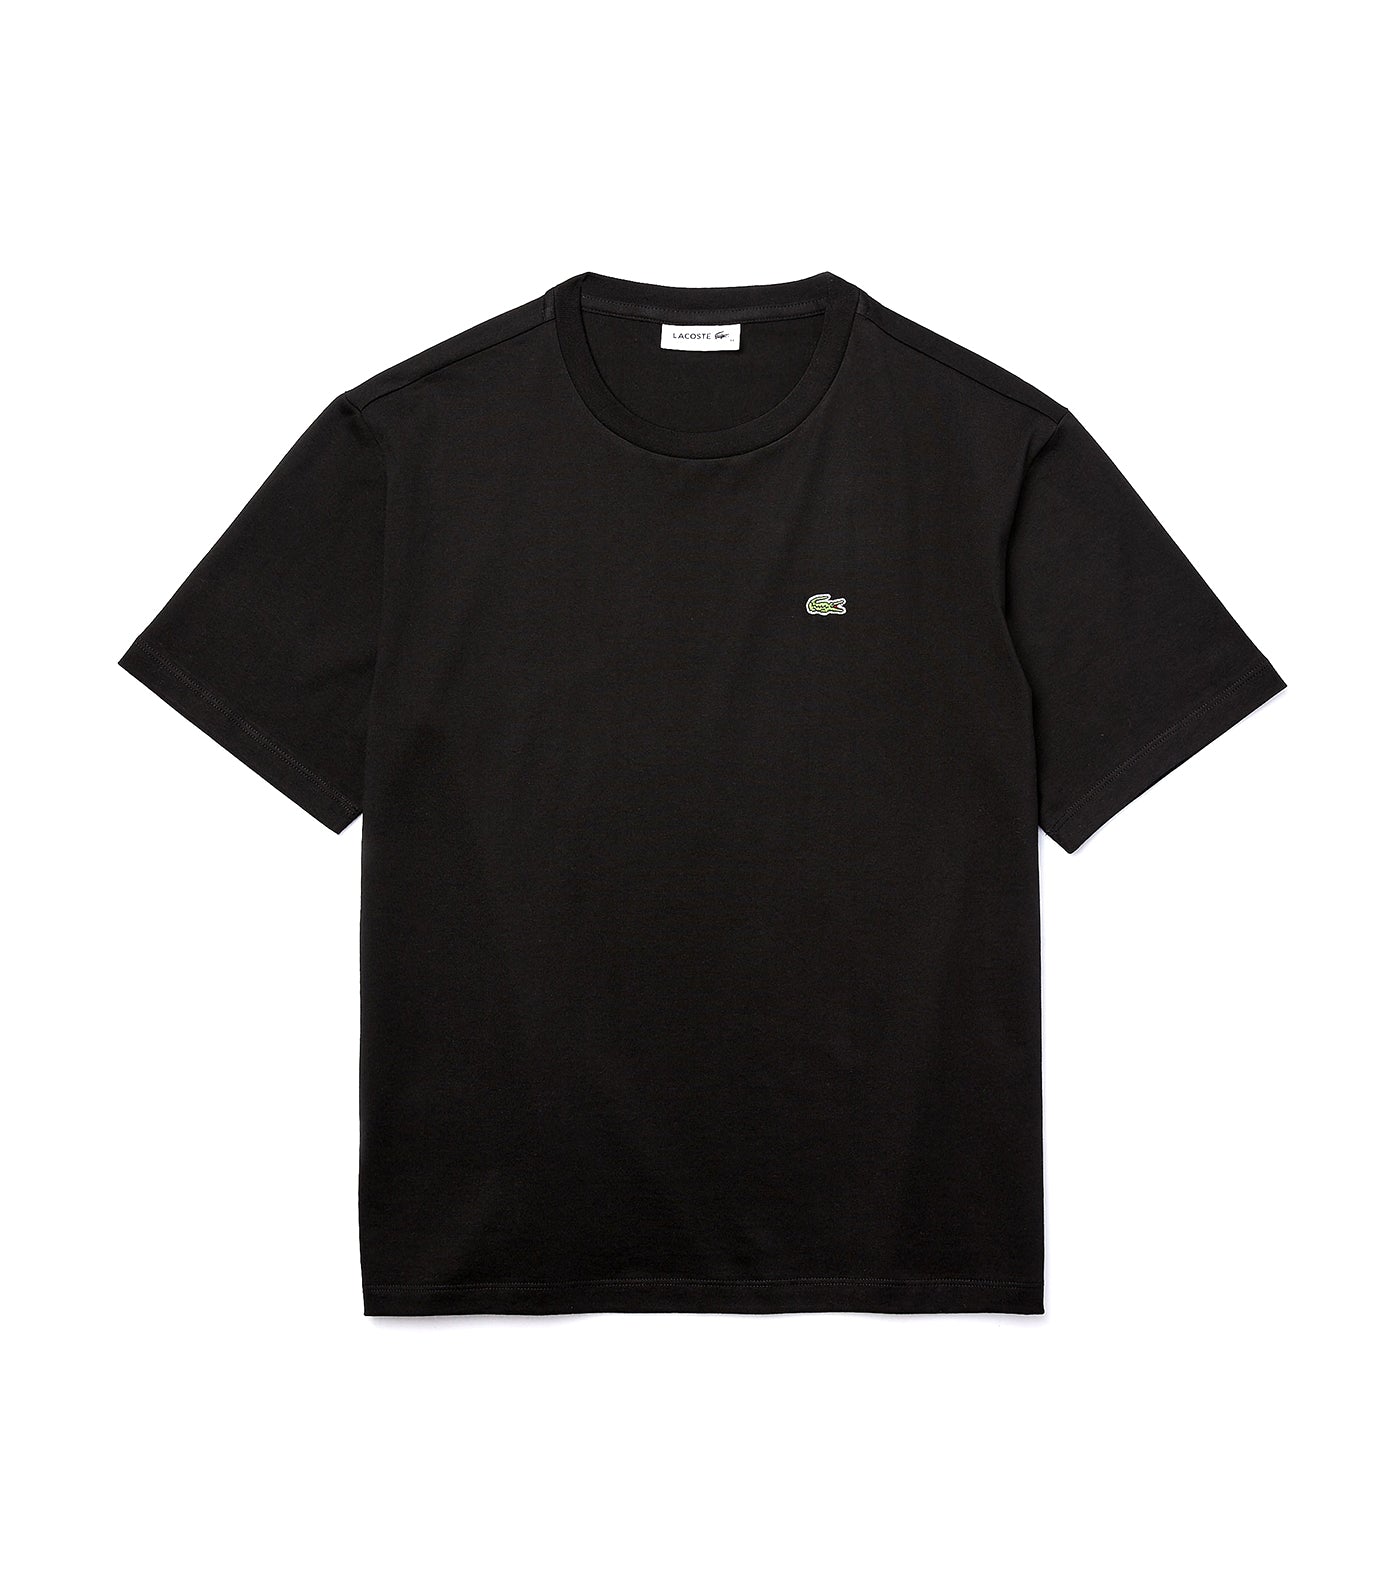 Women’s Crew Neck Premium Cotton T-shirt Black